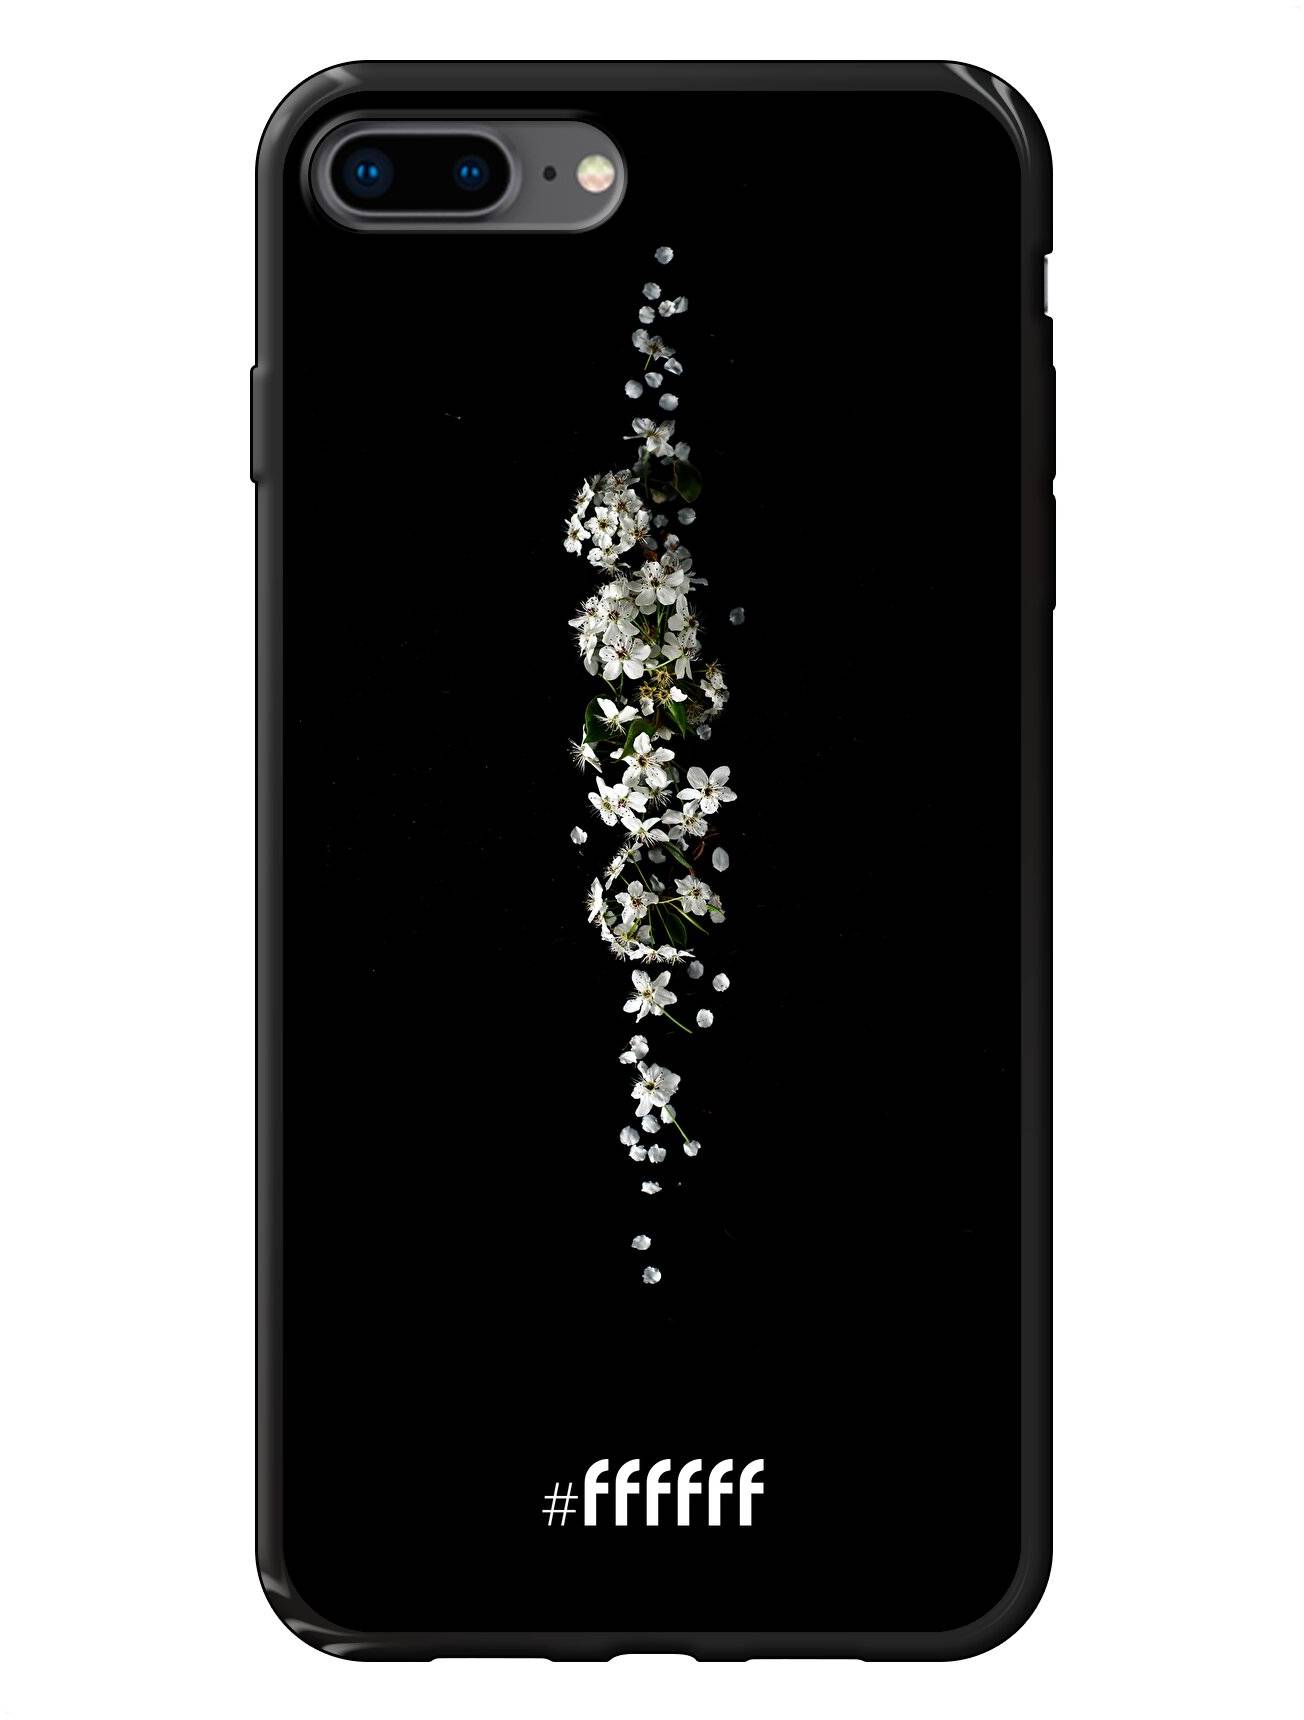 White flowers in the dark iPhone 7 Plus